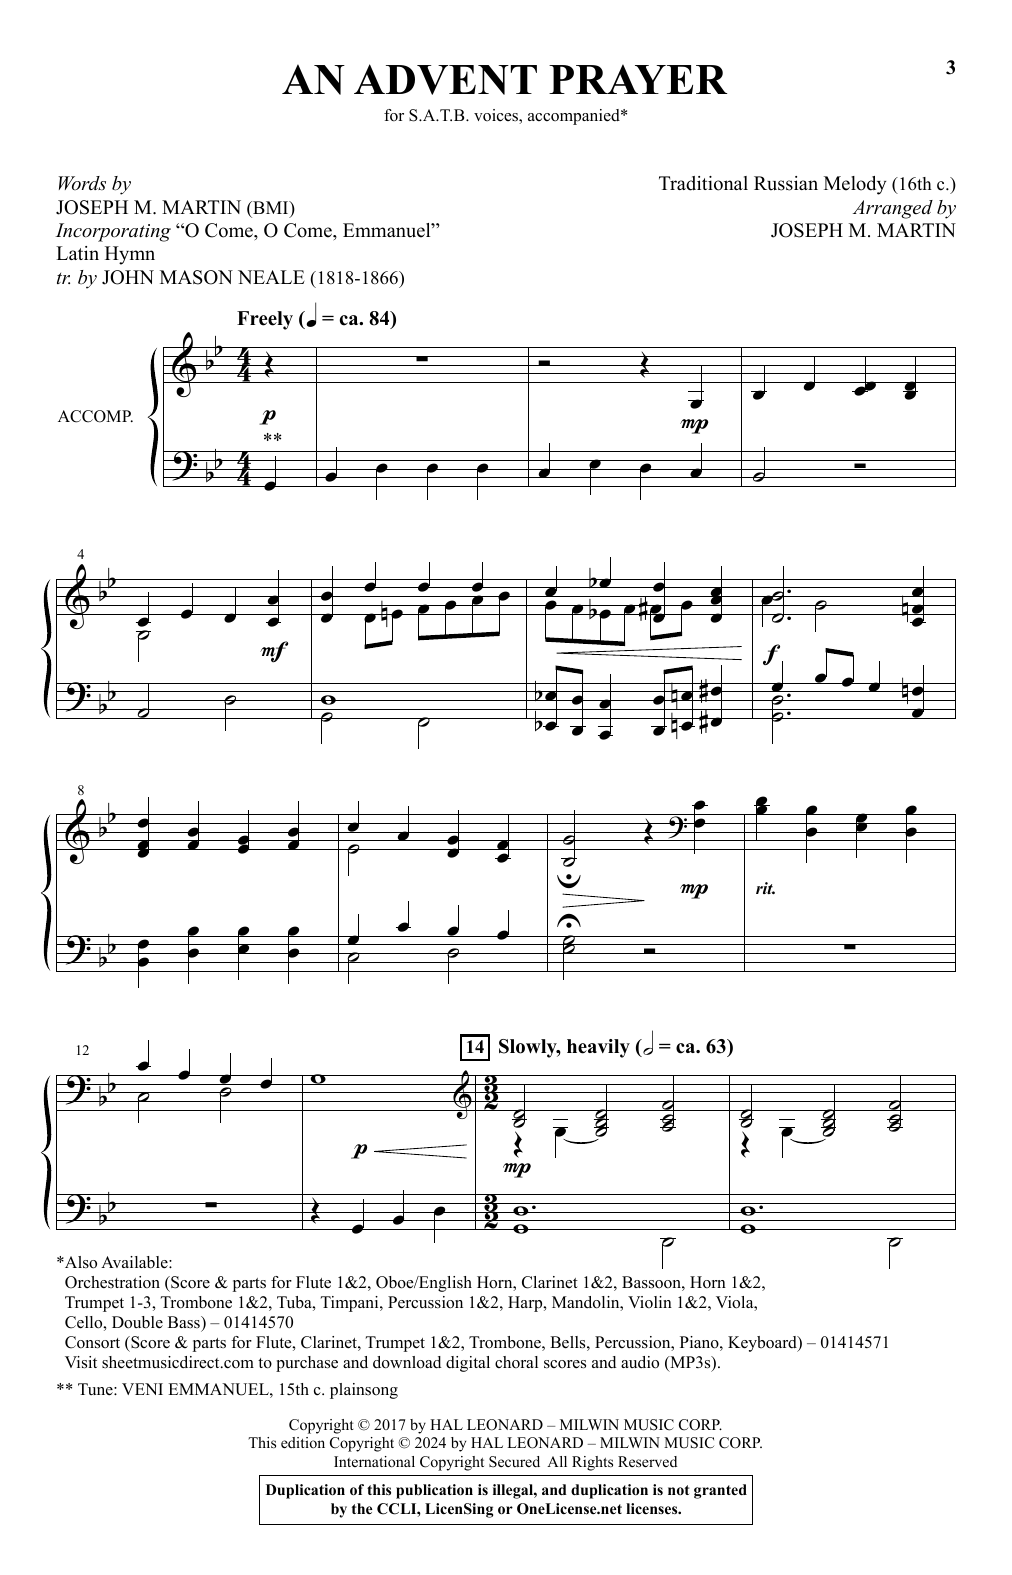 Joseph M. Martin An Advent Prayer sheet music notes and chords arranged for SATB Choir